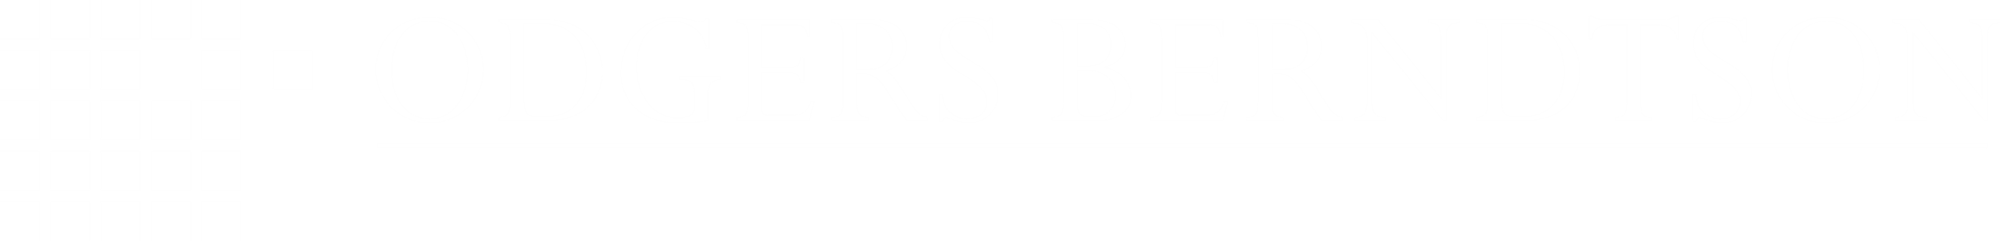 Odgers Berndtson Logo